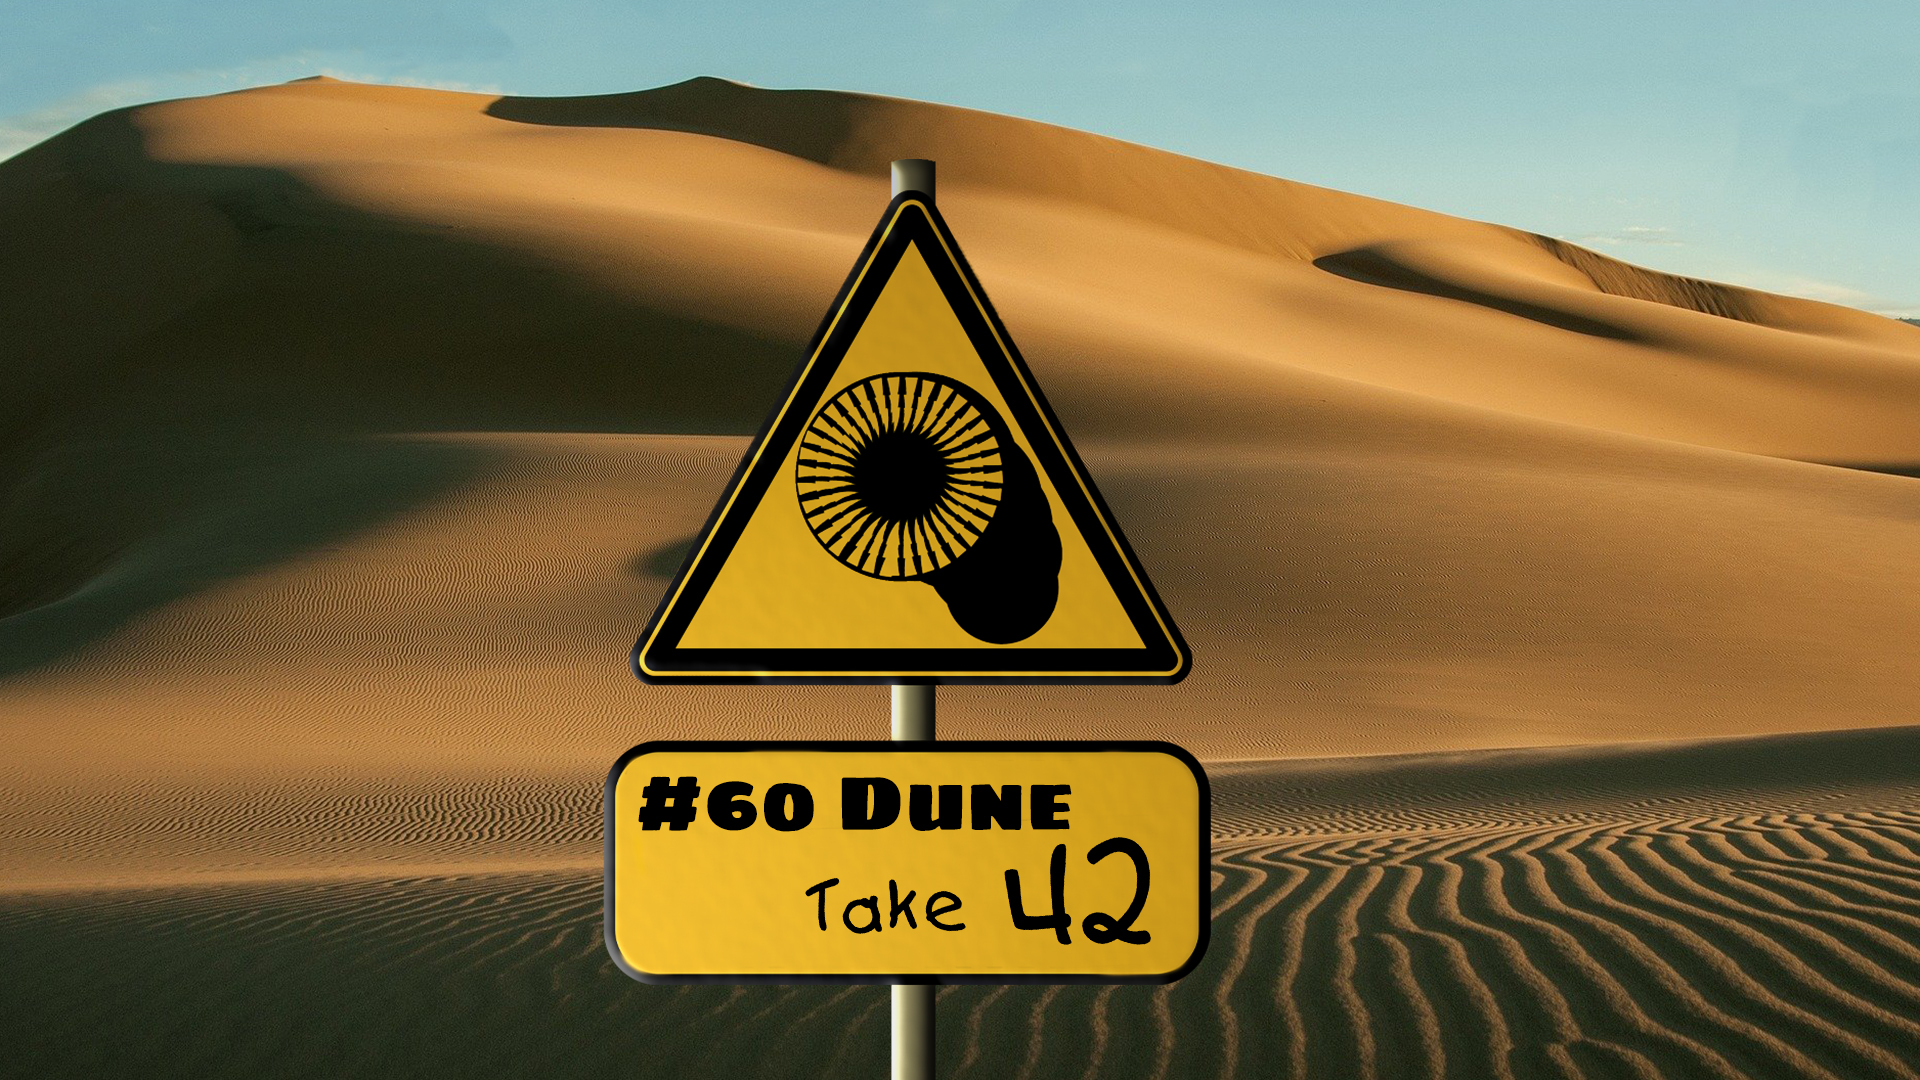 Dune @ Bermudafunk